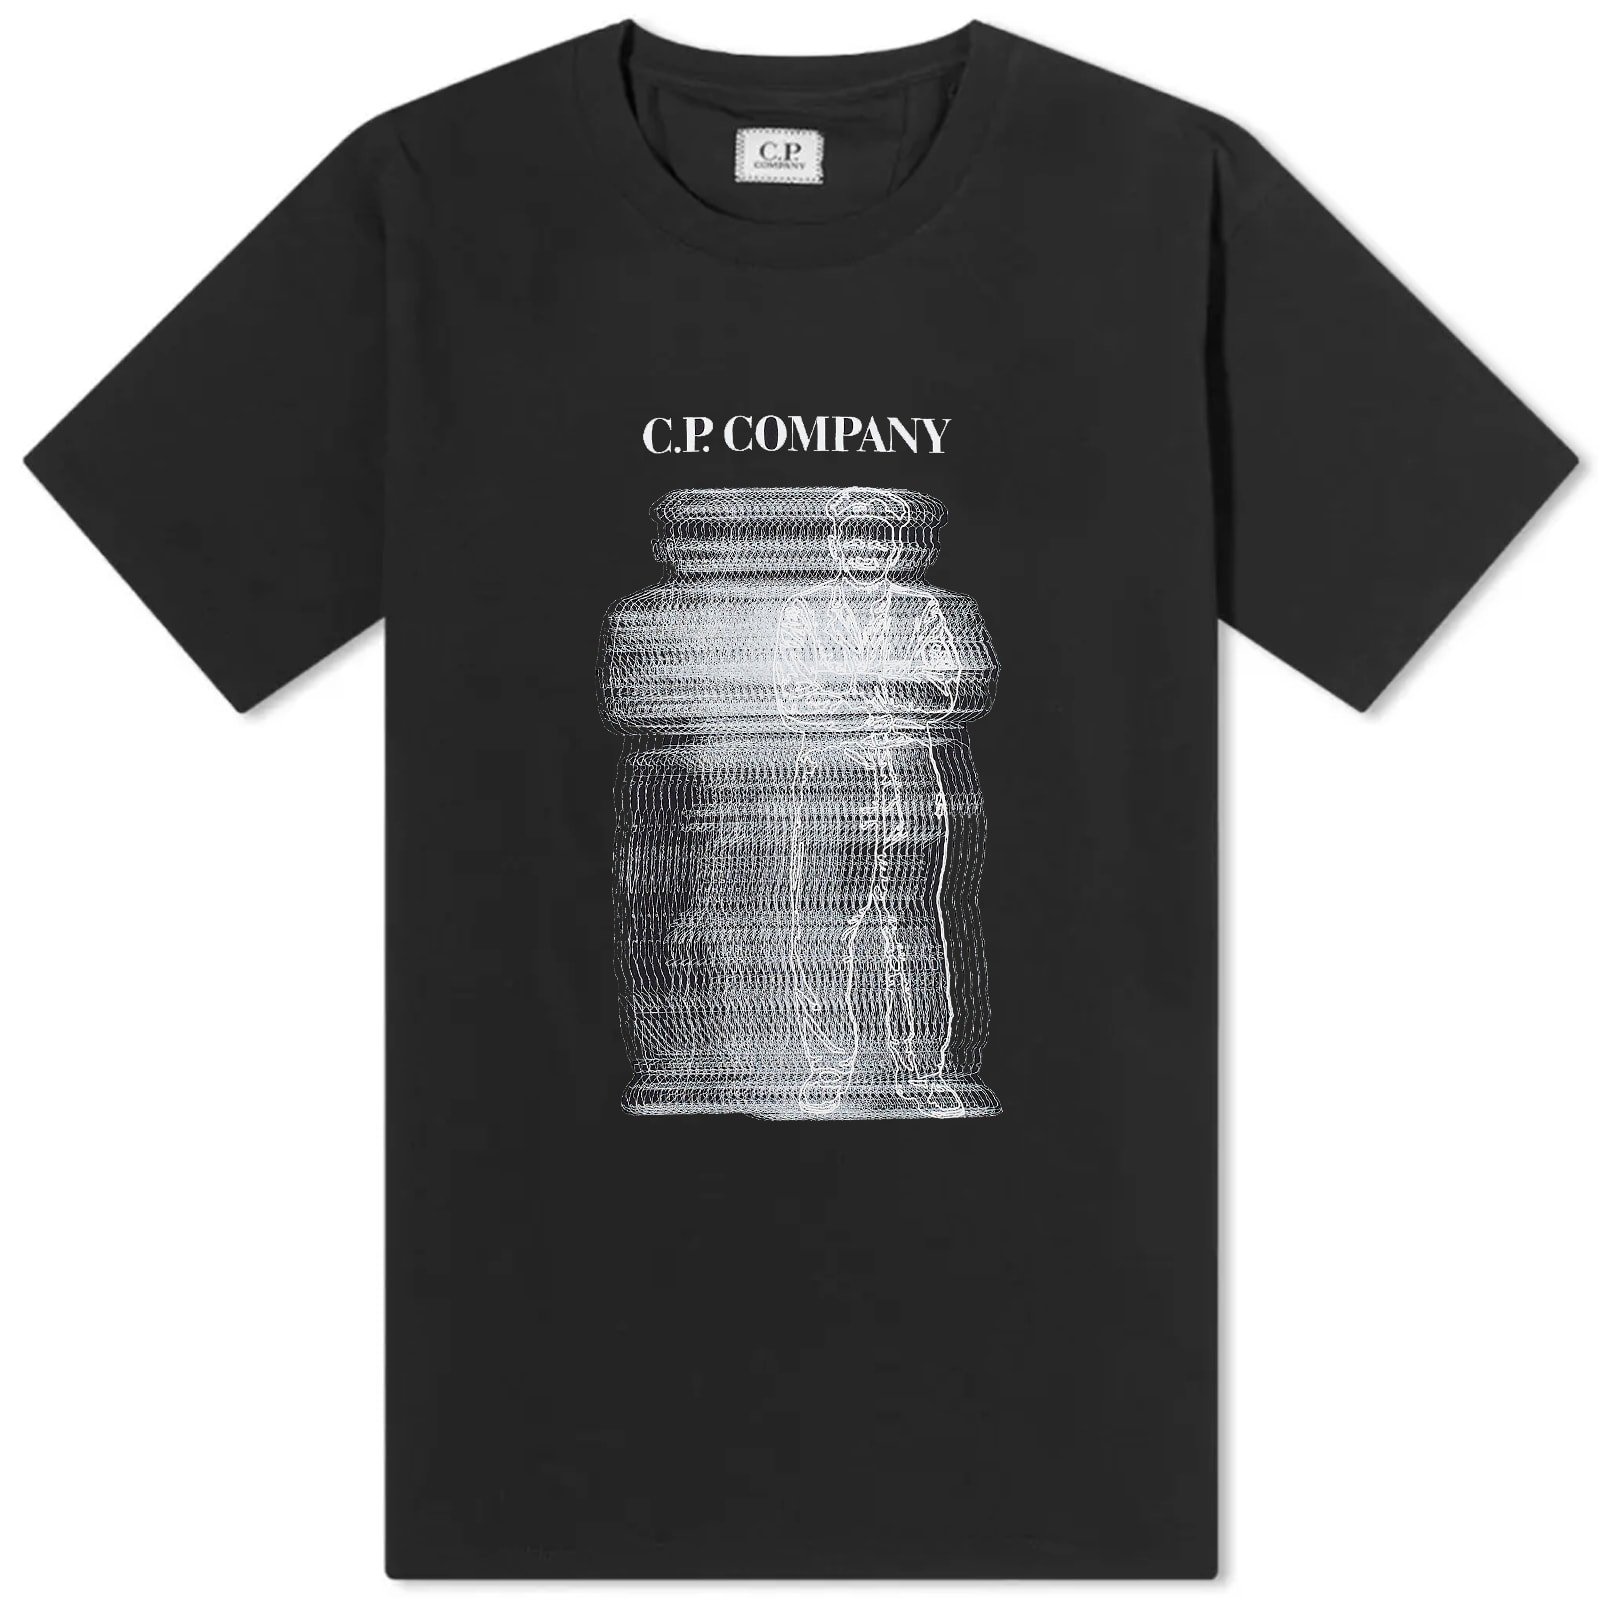 C.P. Company Blur Sailor T-Shirt